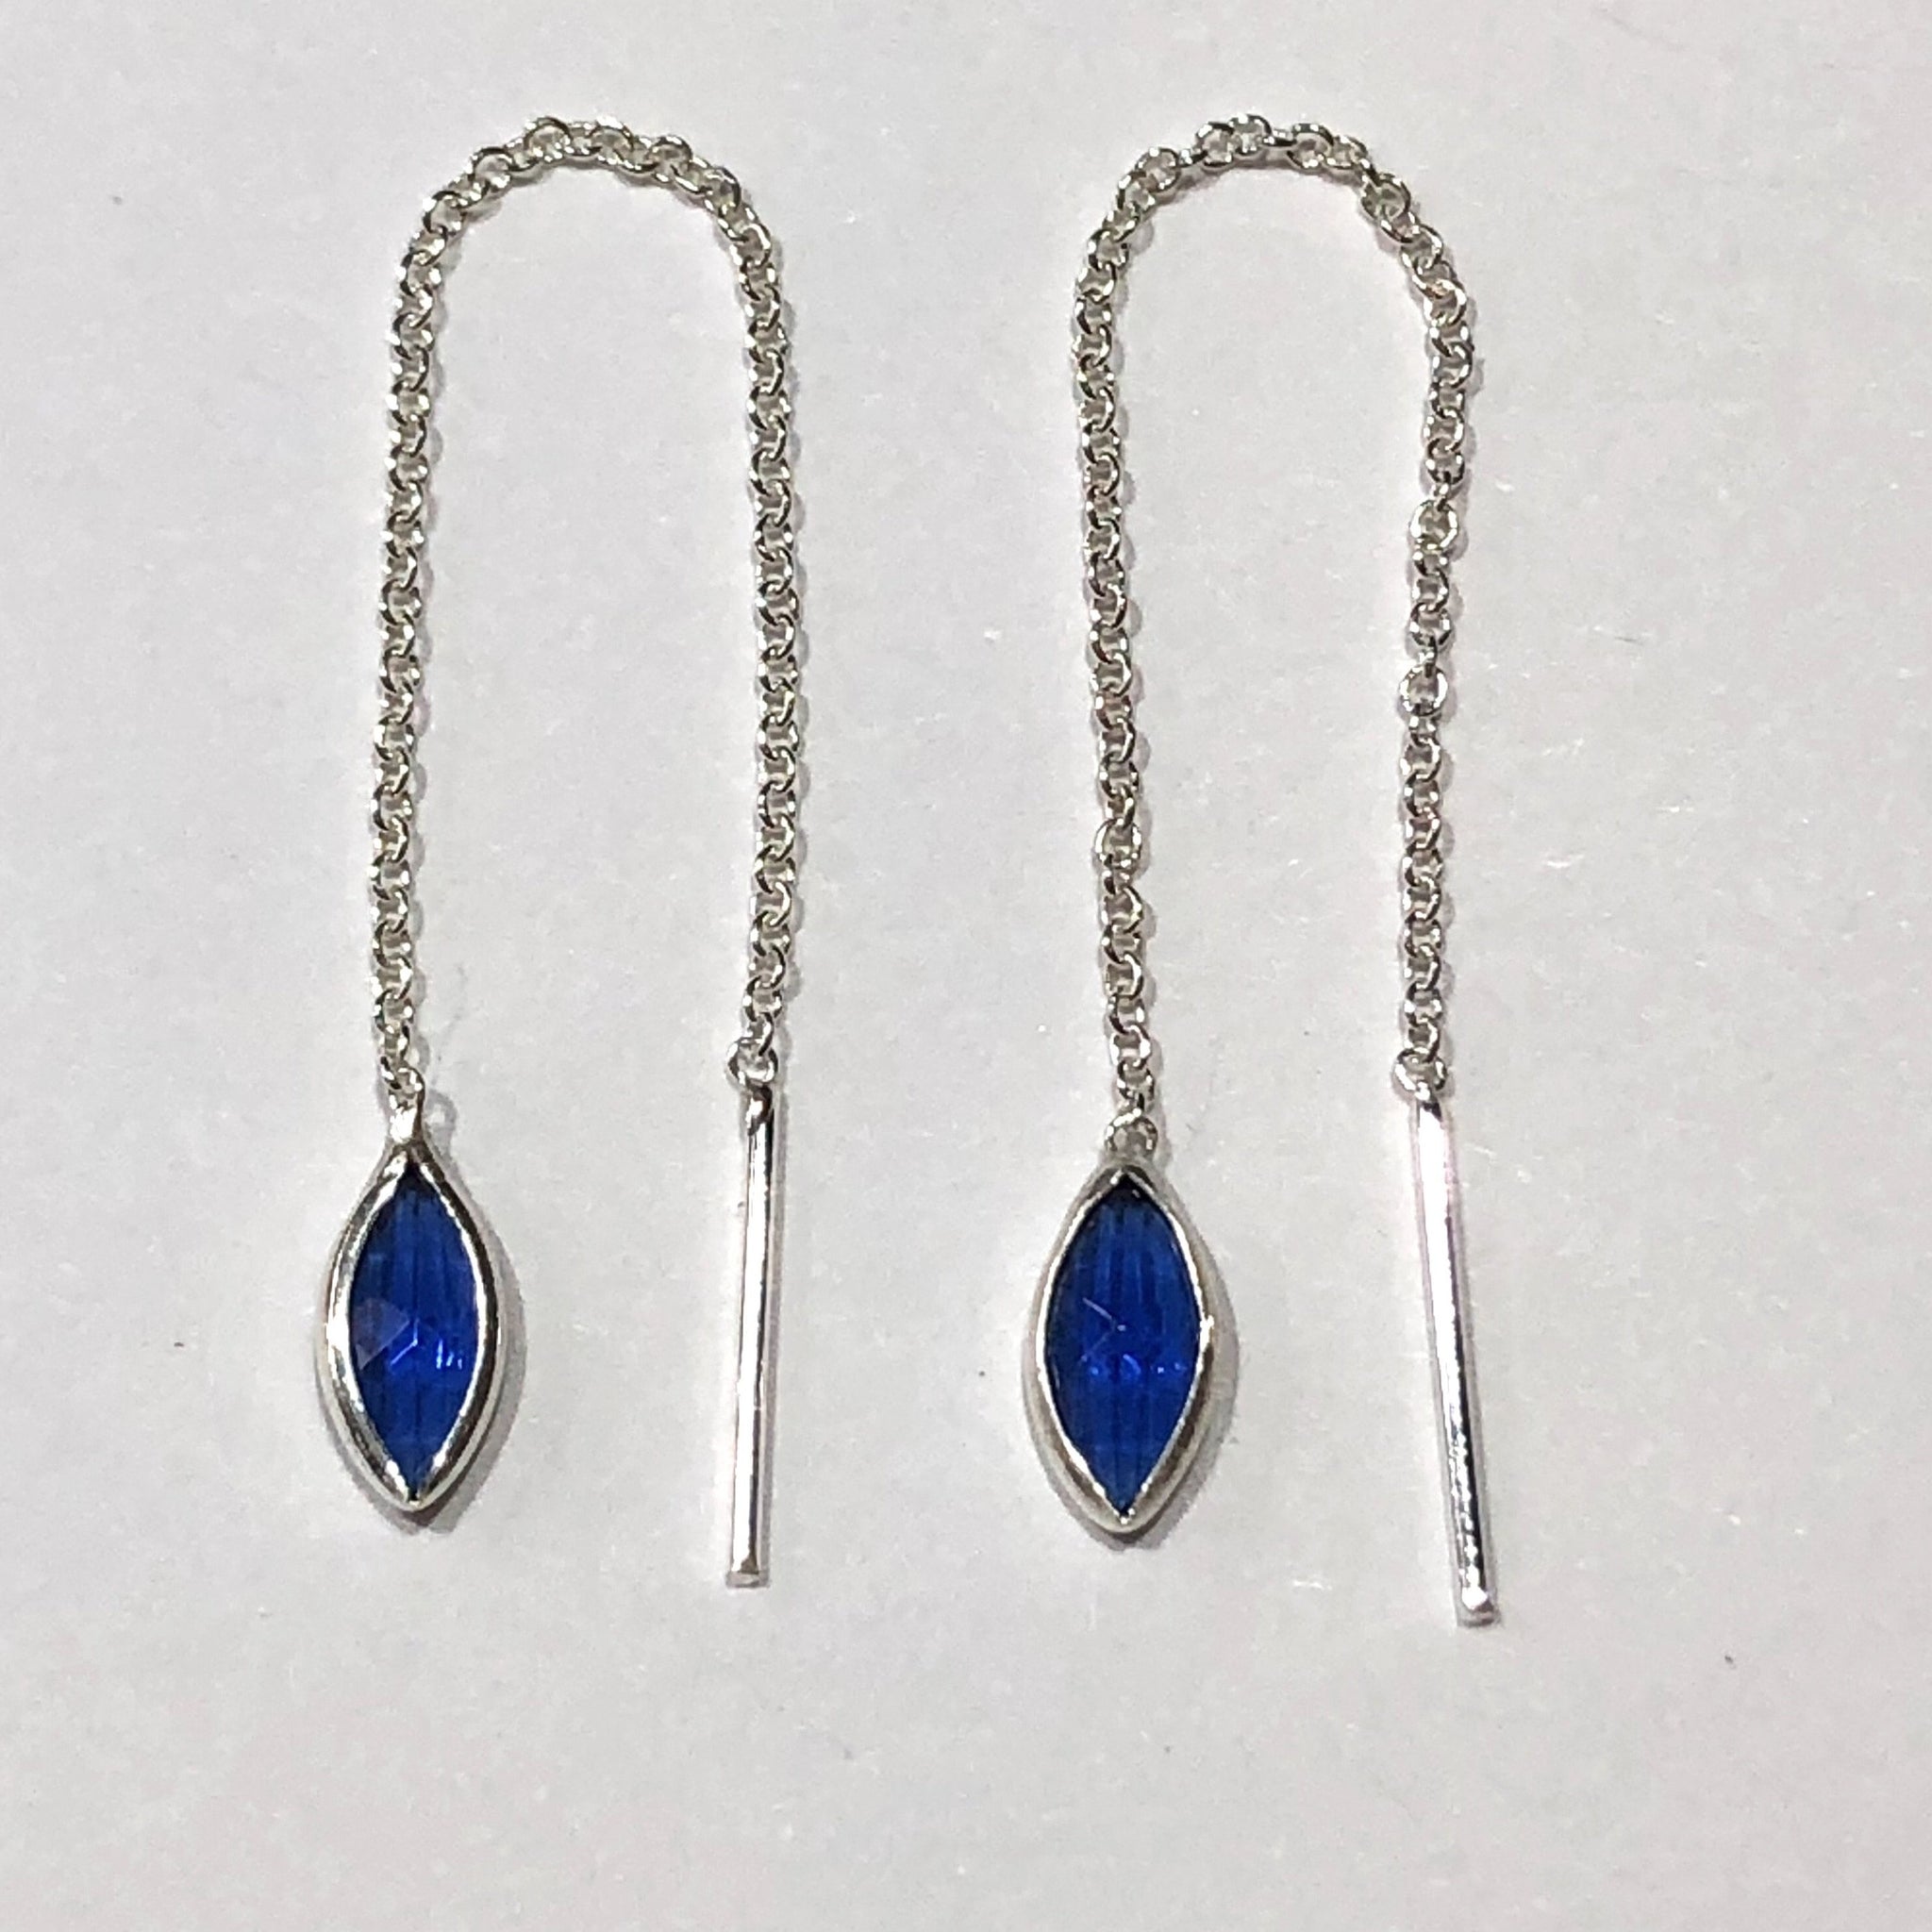 Crystal threader earrings